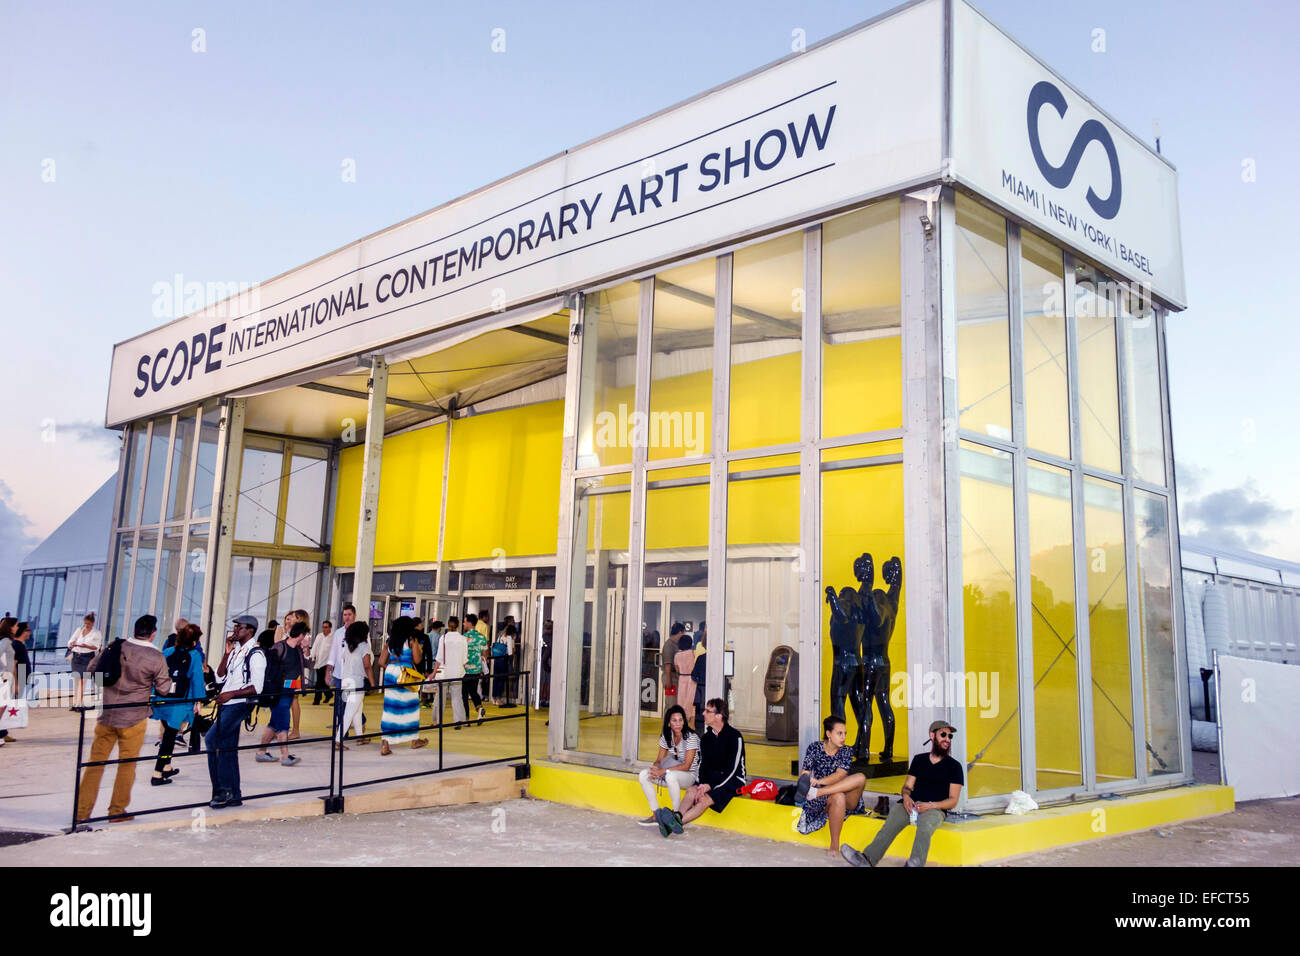 Miami Beach Florida,Scope International Contemporary Art Show,Art Basel satellite fair,fronte,ingresso,FL141205024 Foto Stock